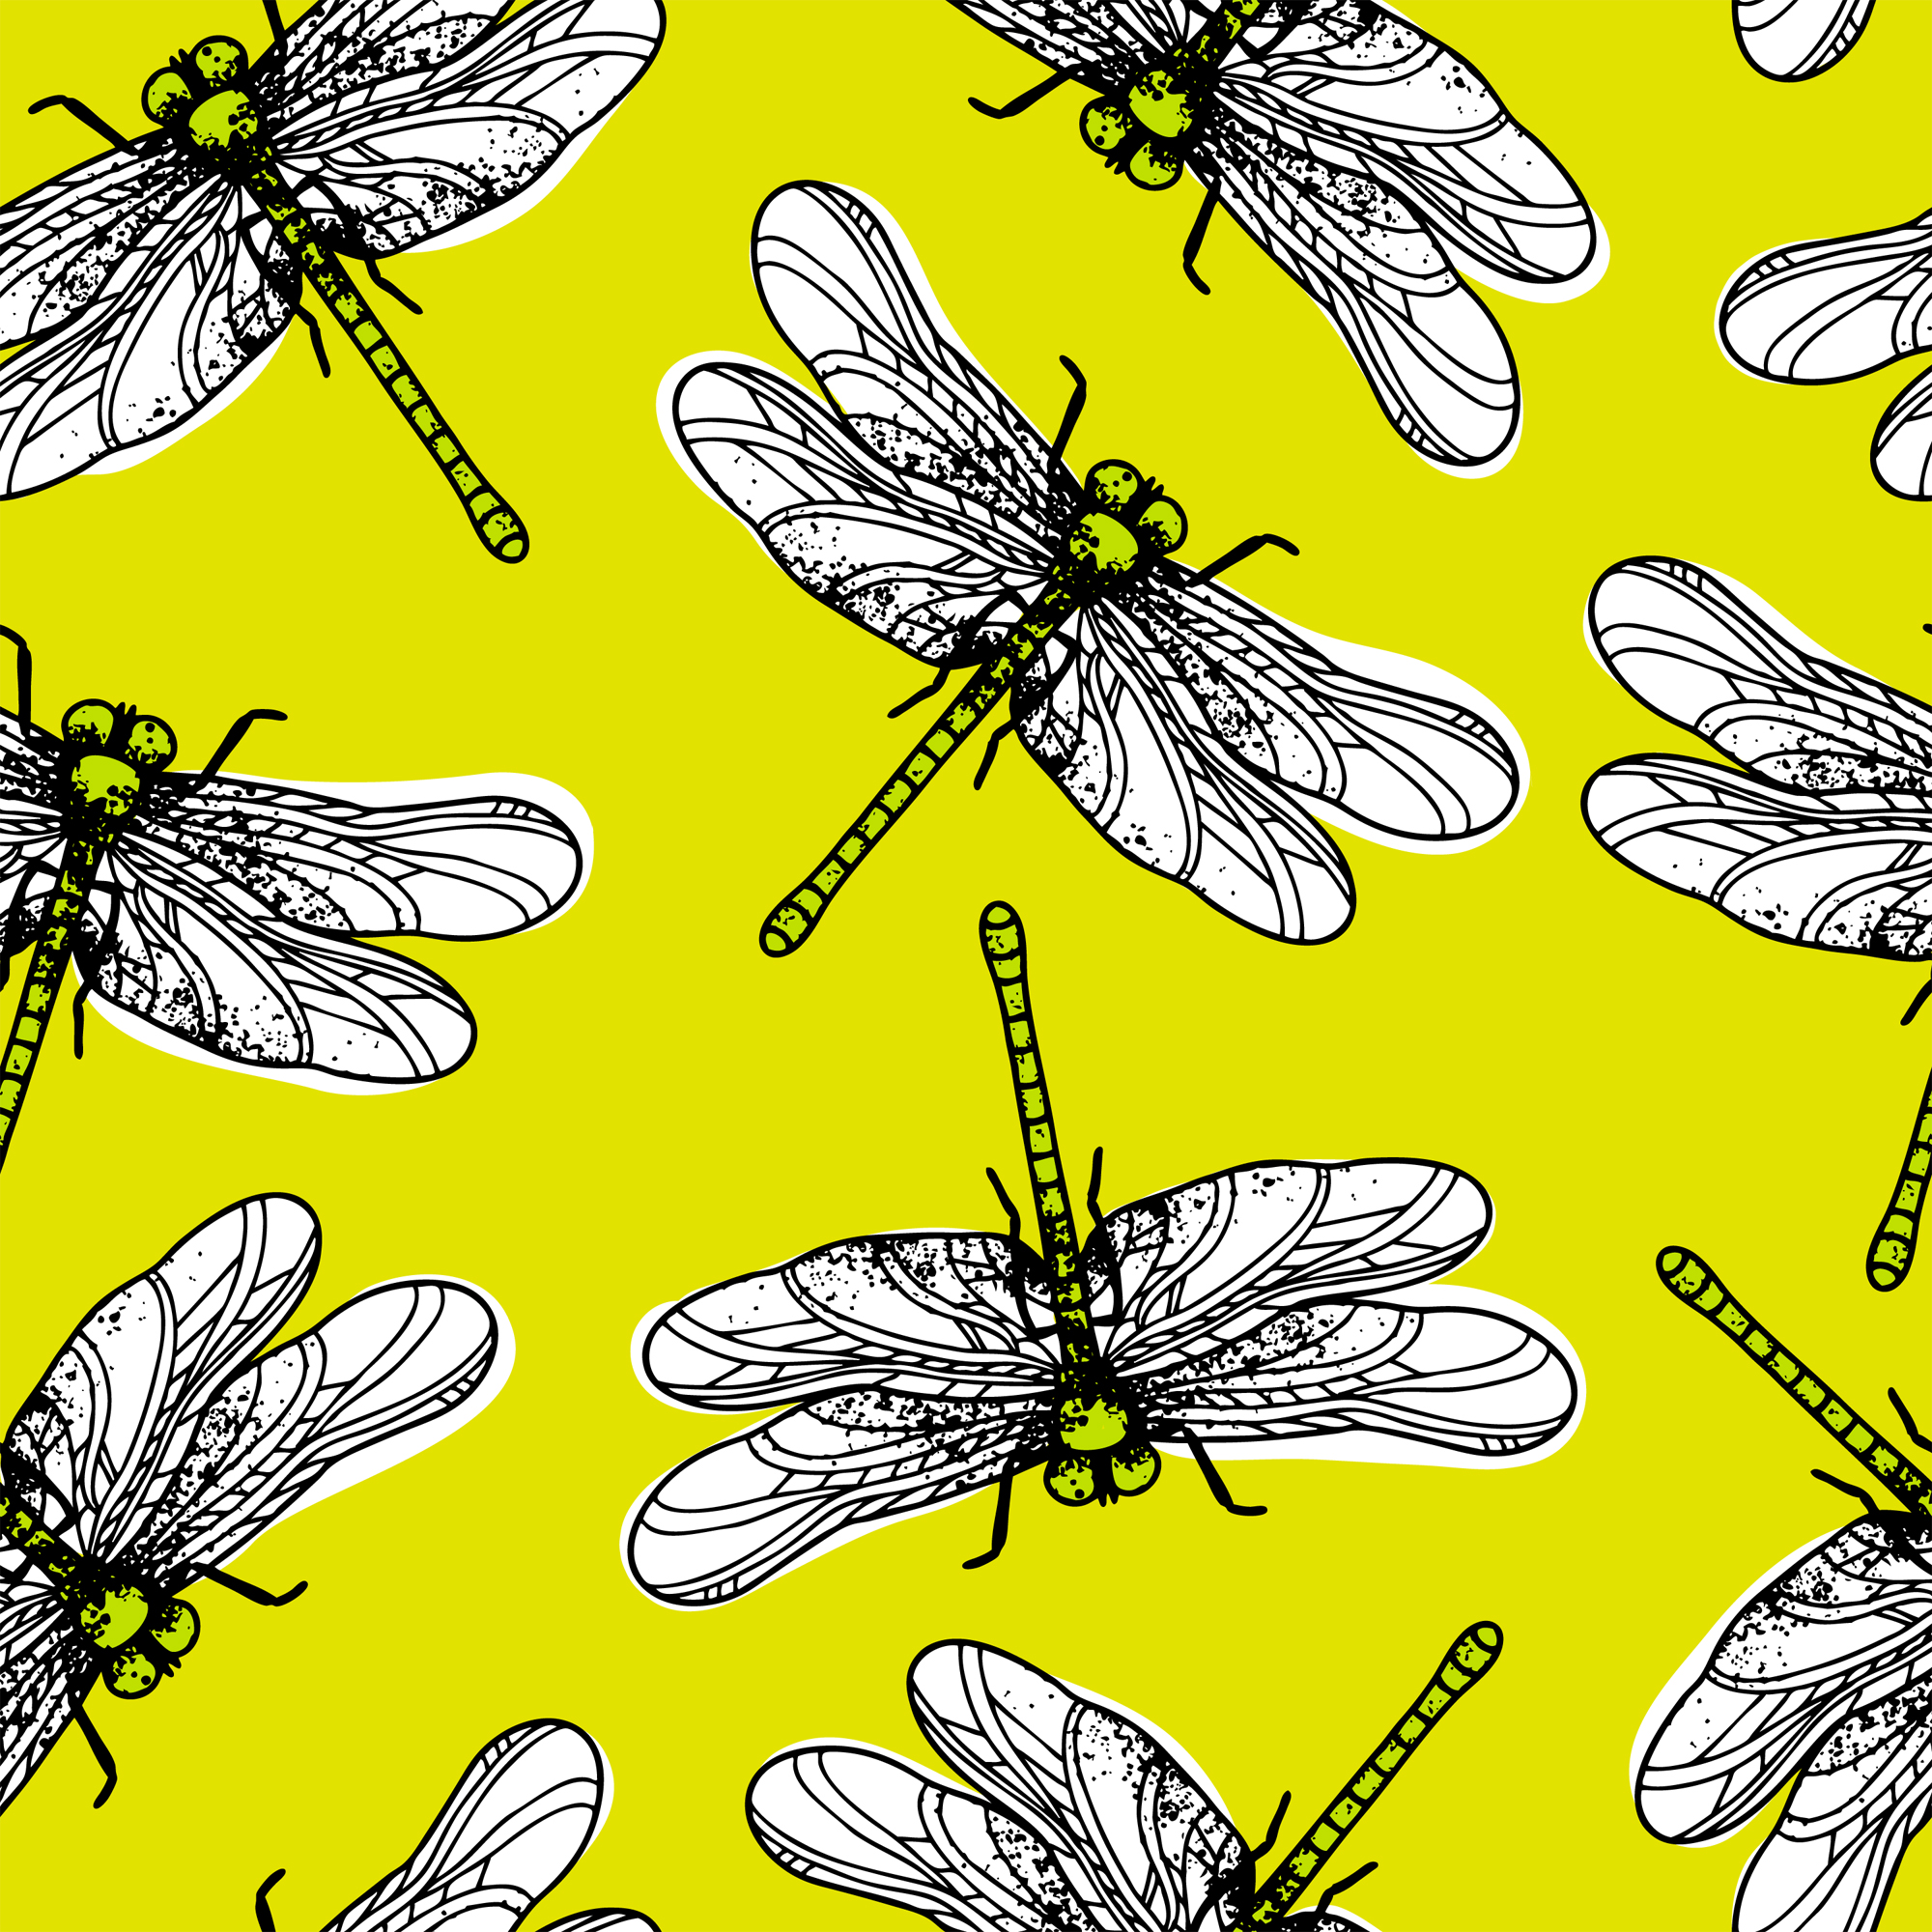 179dragonfly pattern2